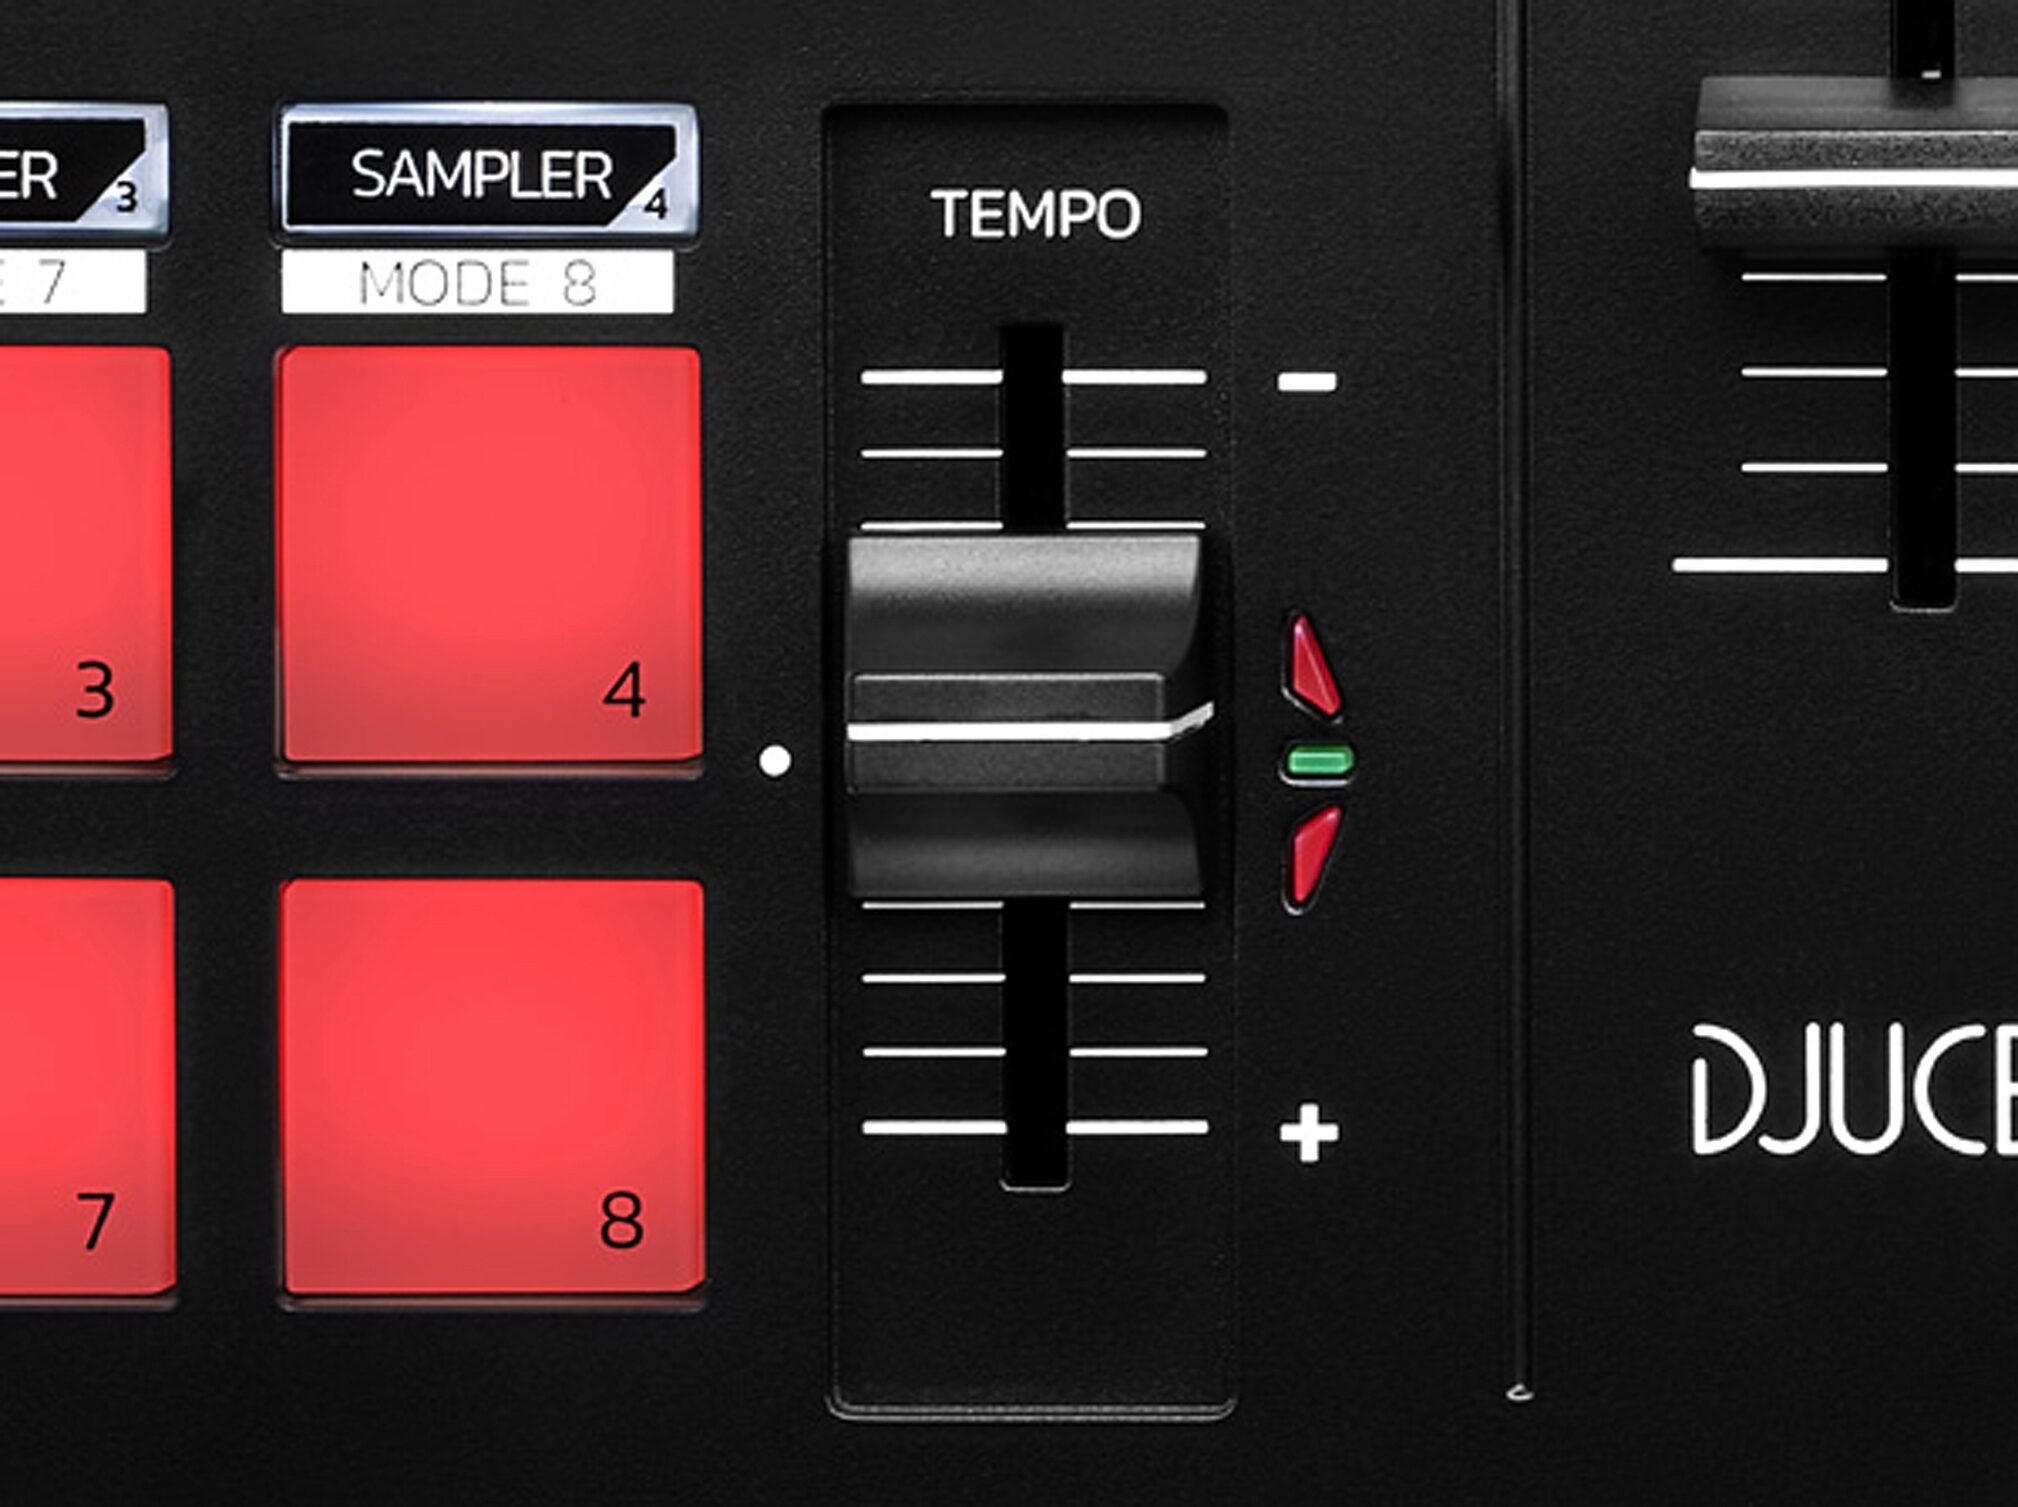 Hercules DJControl Inpulse 300 2-Deck USB DJ Controller for Serato DJ Lite  and DJUCED